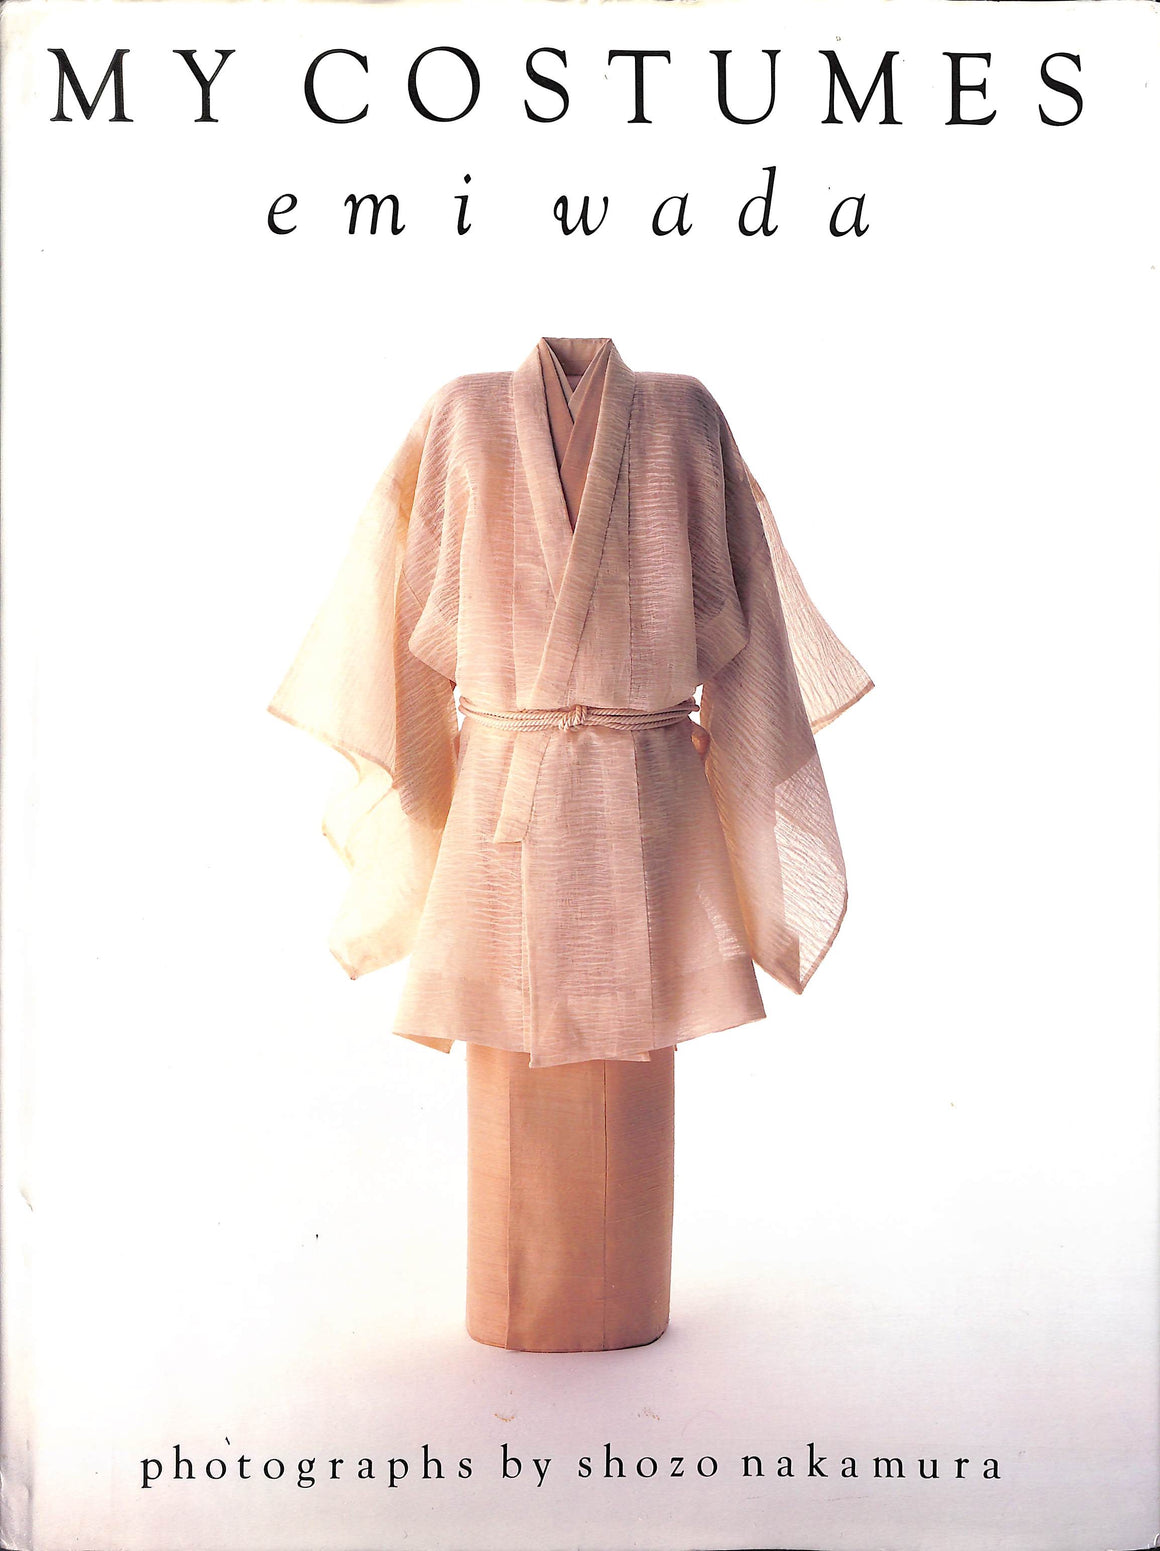 "My Costumes" 1989 WADA, Emi